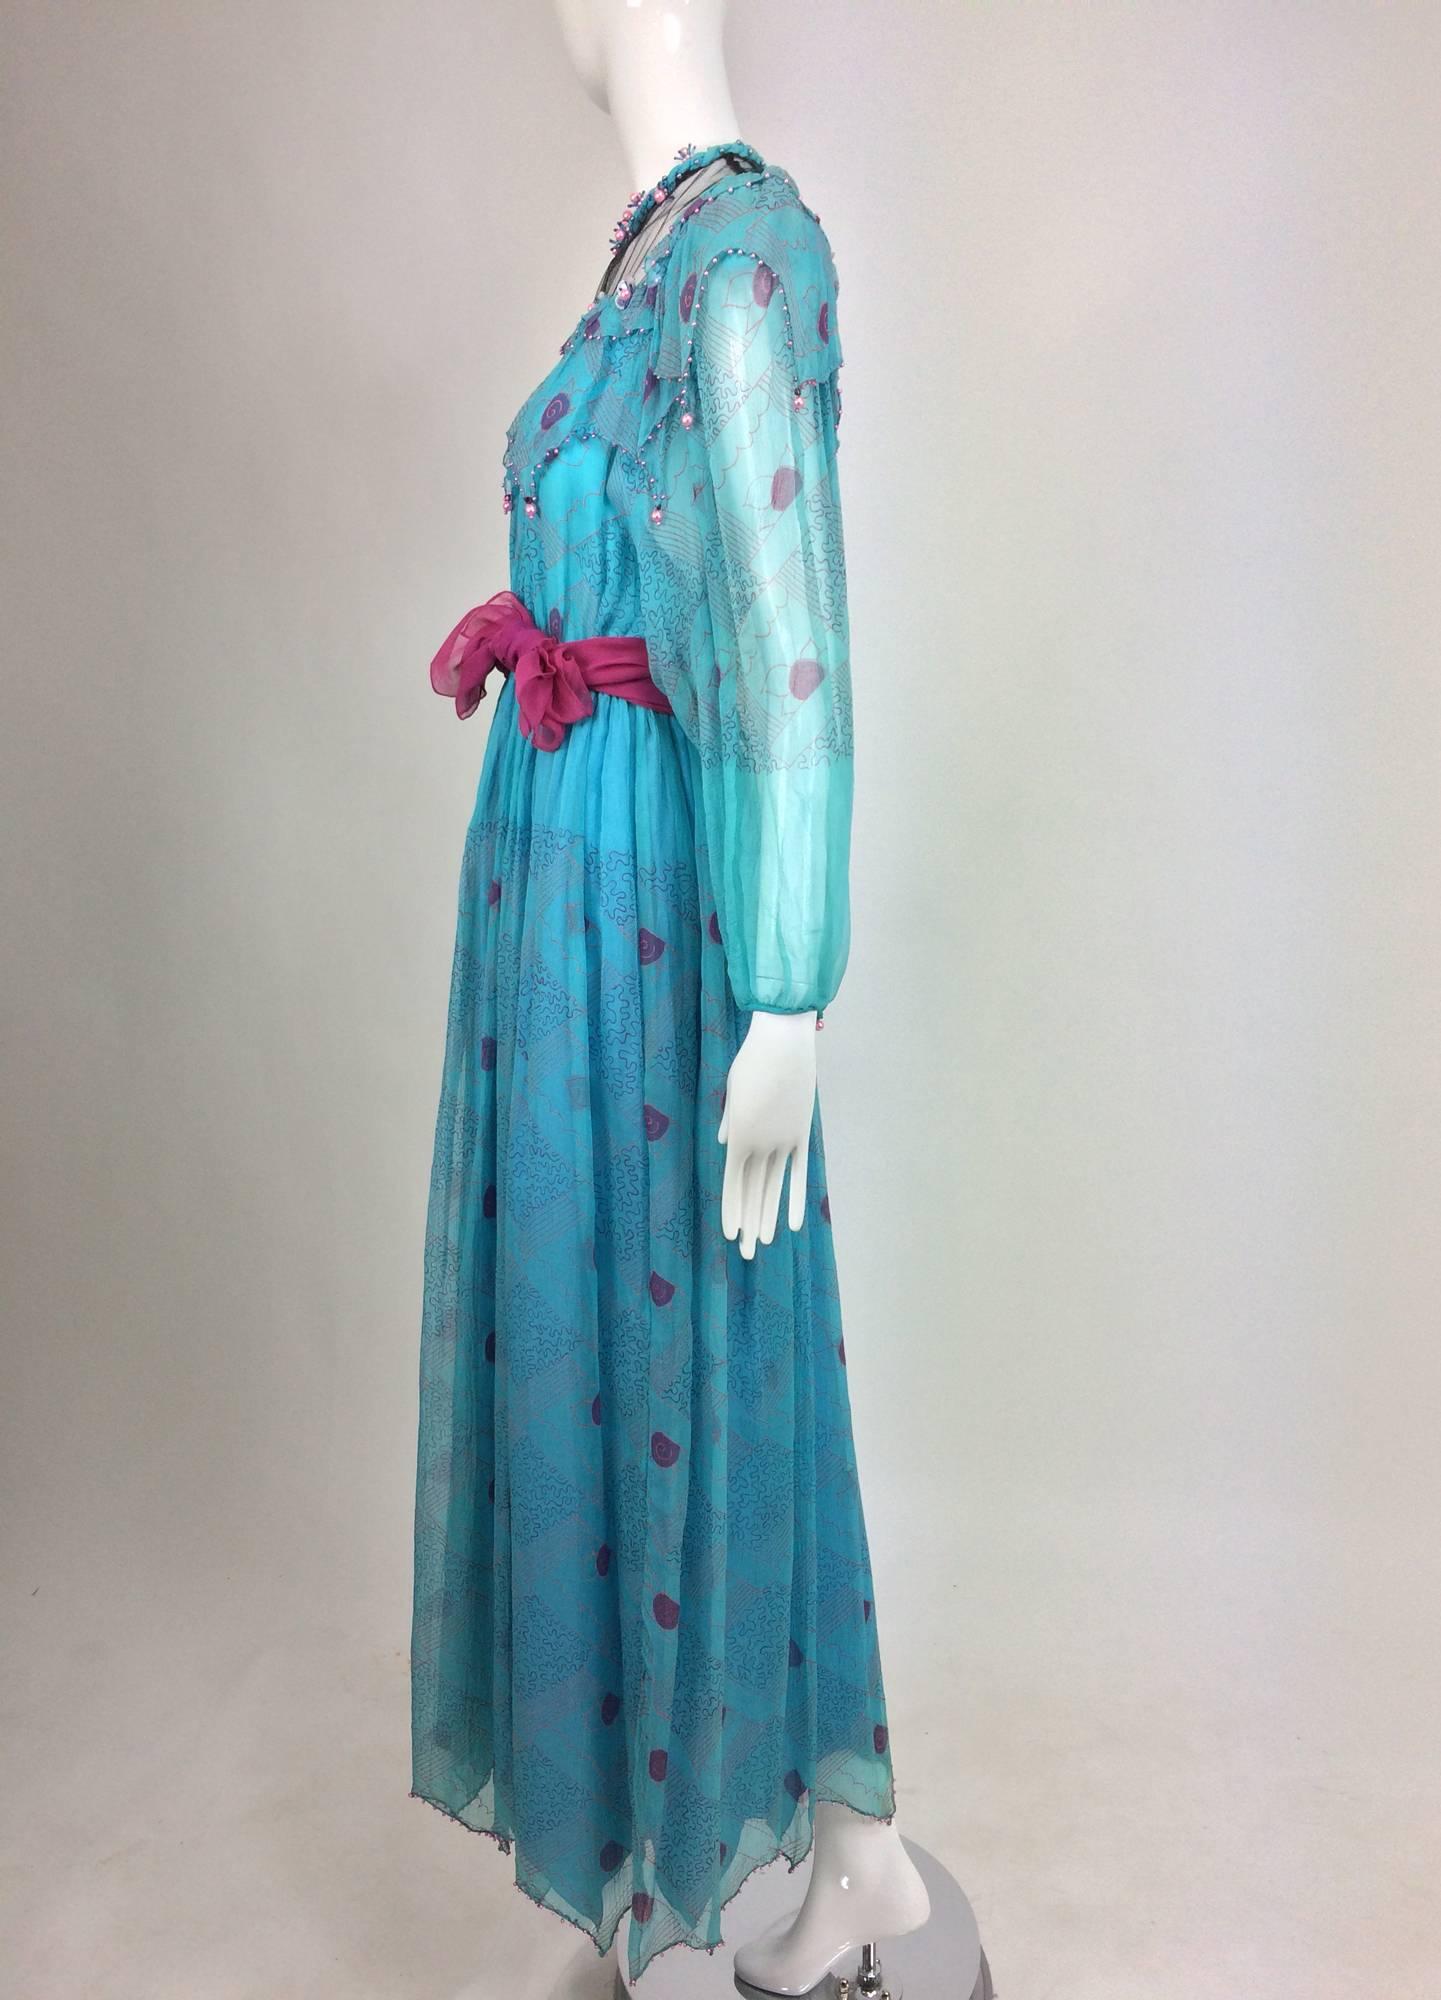 
Zandra Rhodes hand printed turquoise silk chiffon beaded dress from the 1970s marked 